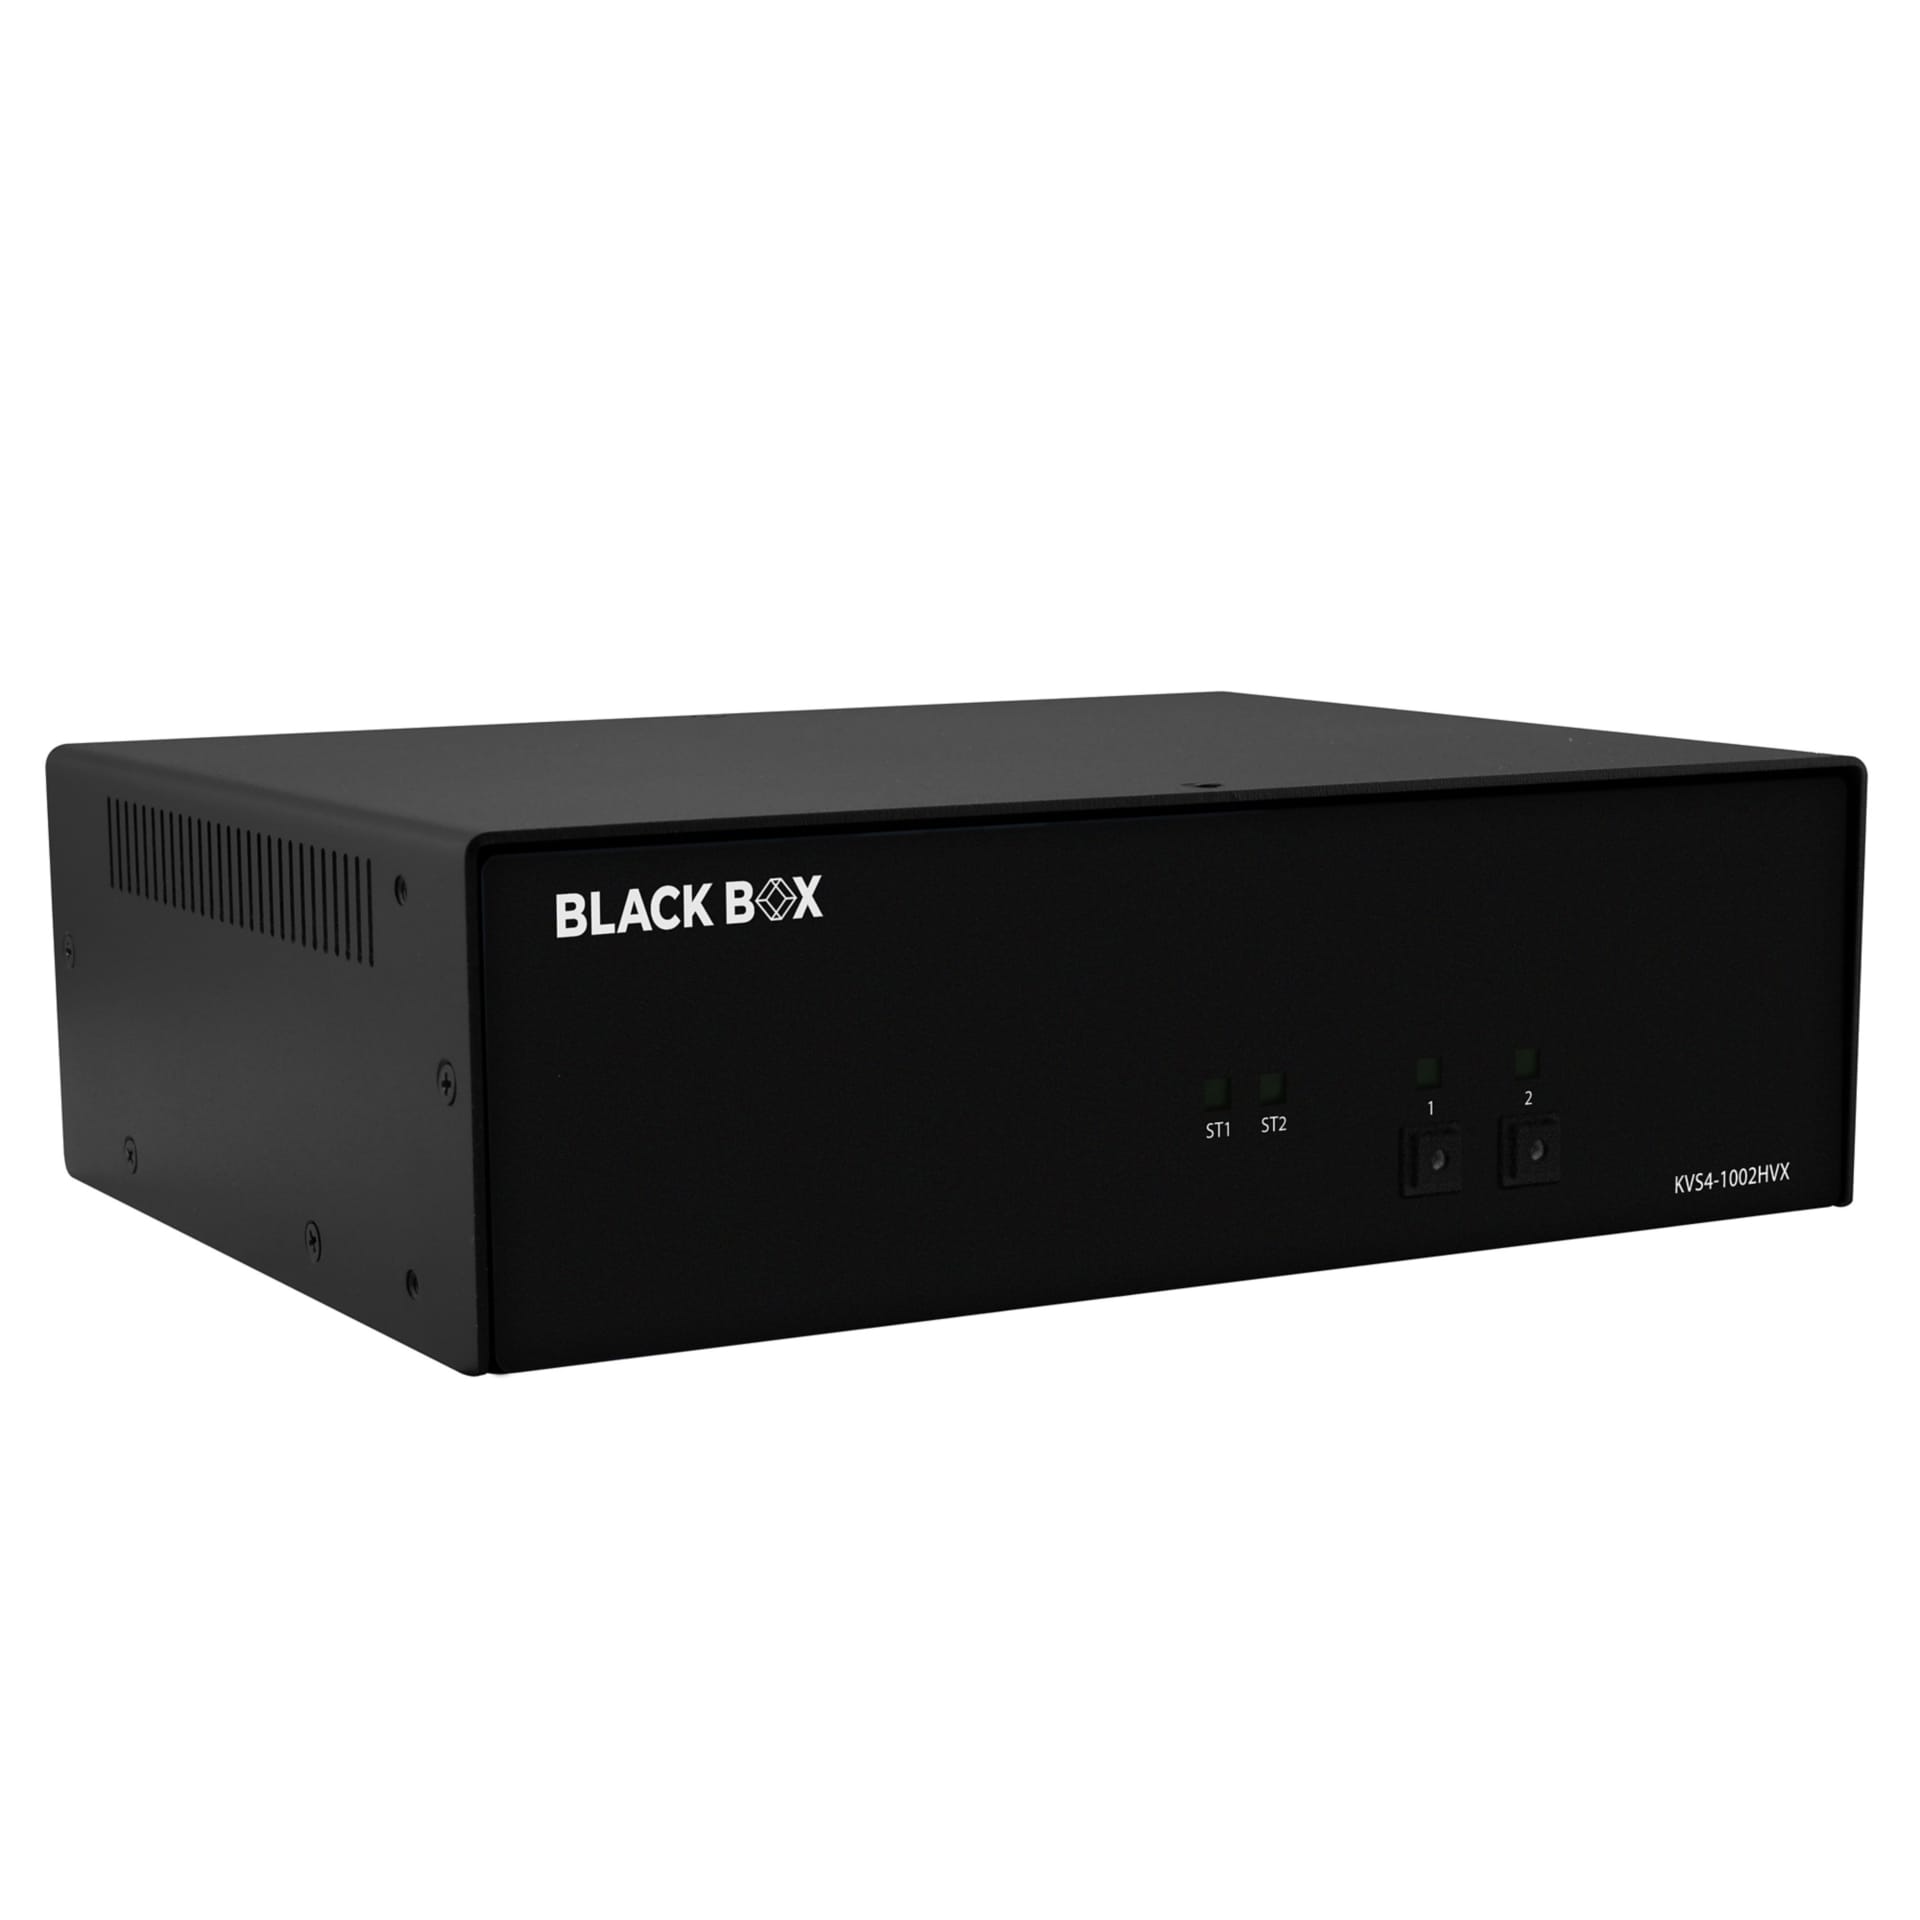 Black Box Secure KVM Switch, NIAP 4.0 - 2-Port, SH, FlexPort HDMI/DP CAC